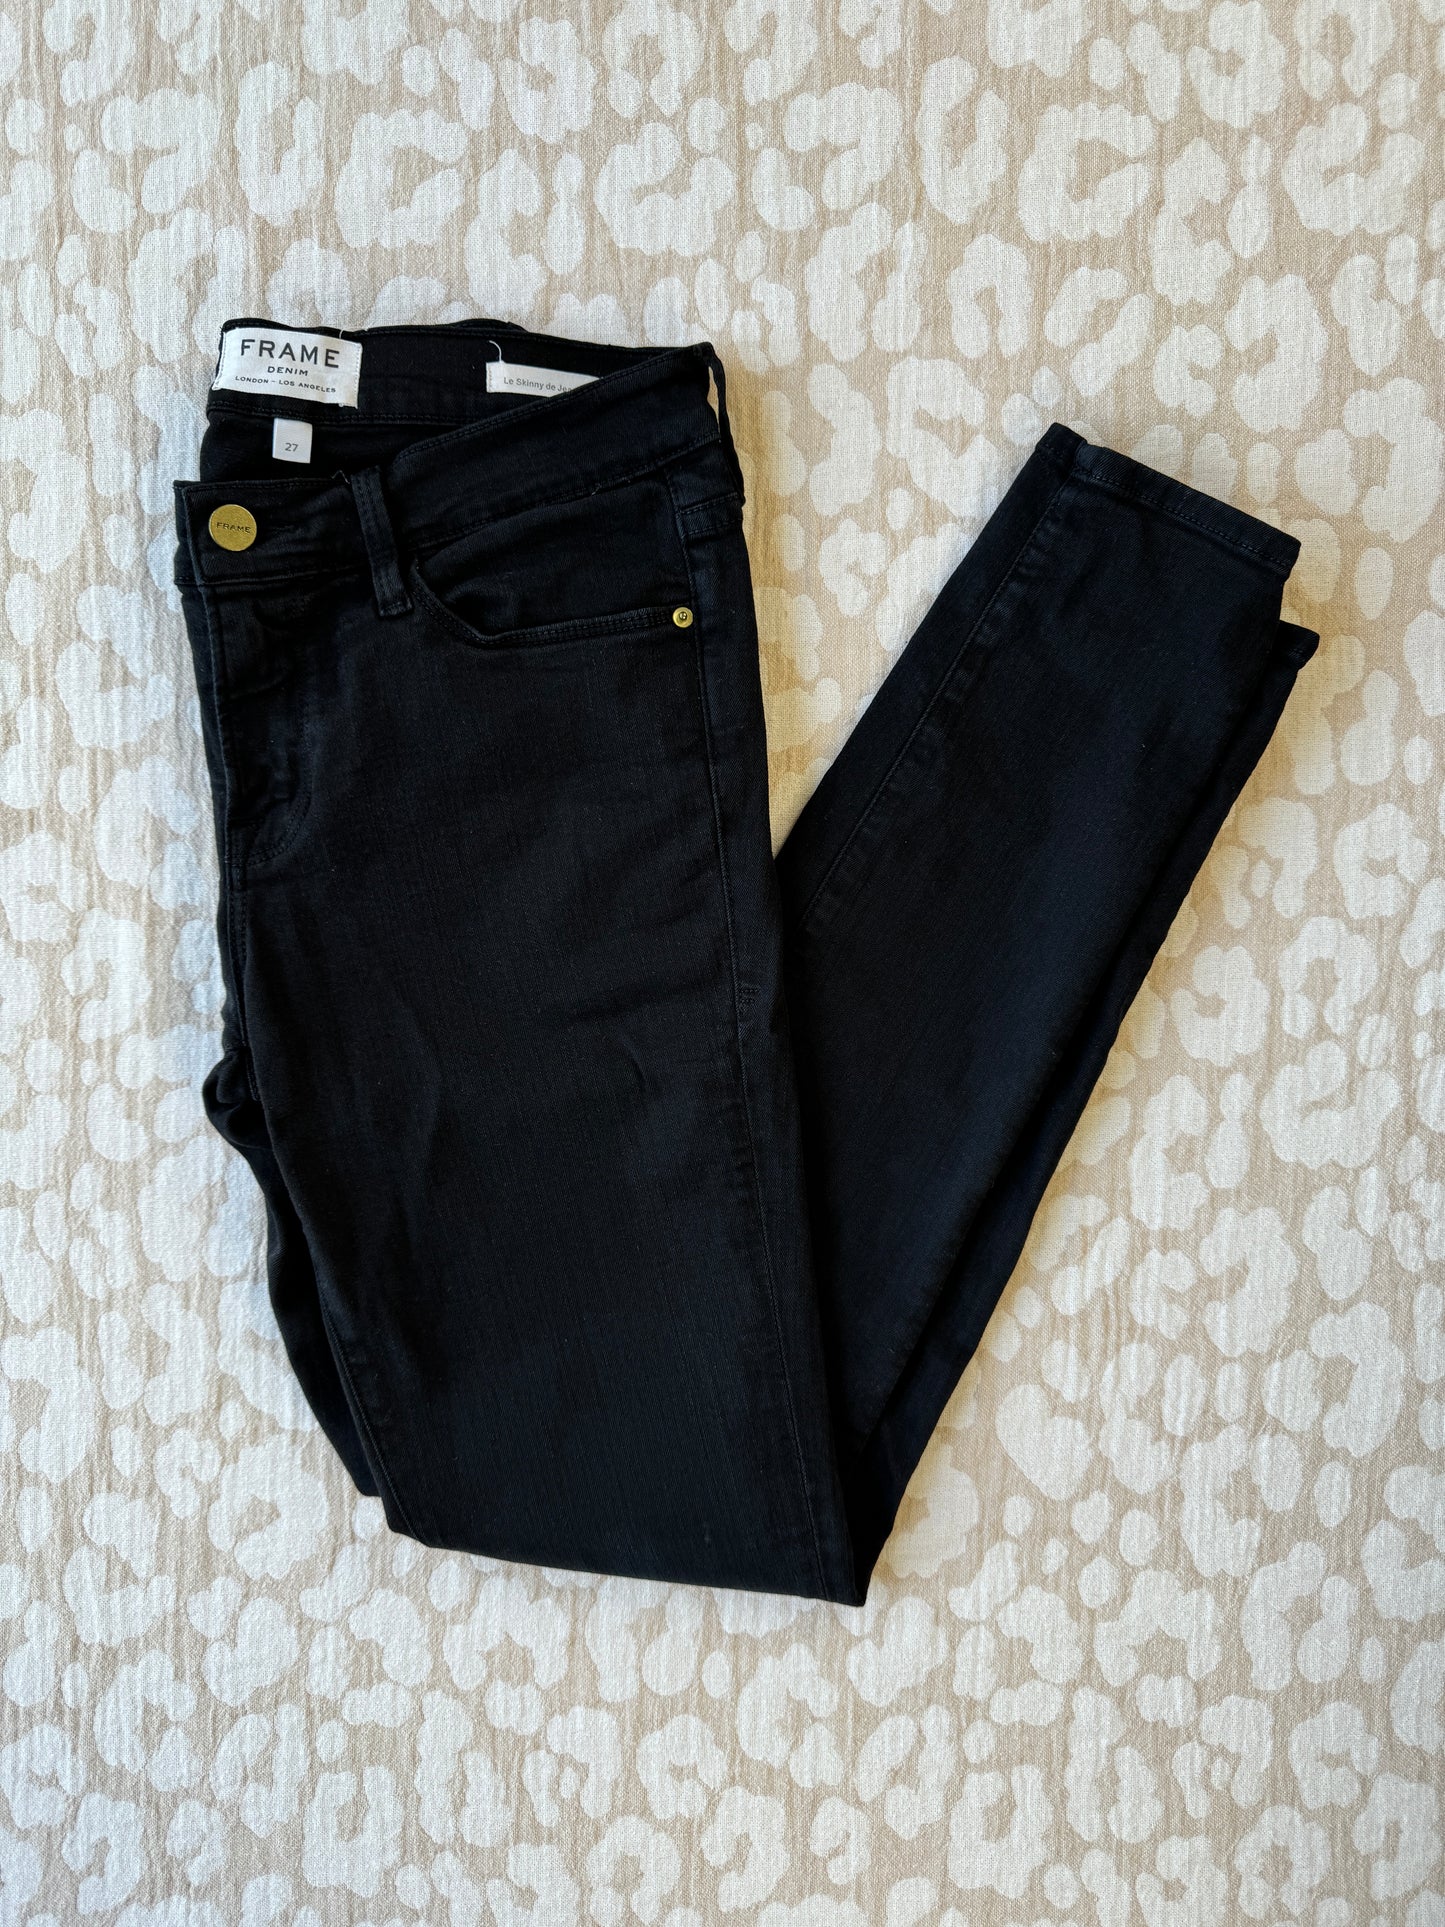 Frame Skinny Jeans (27)